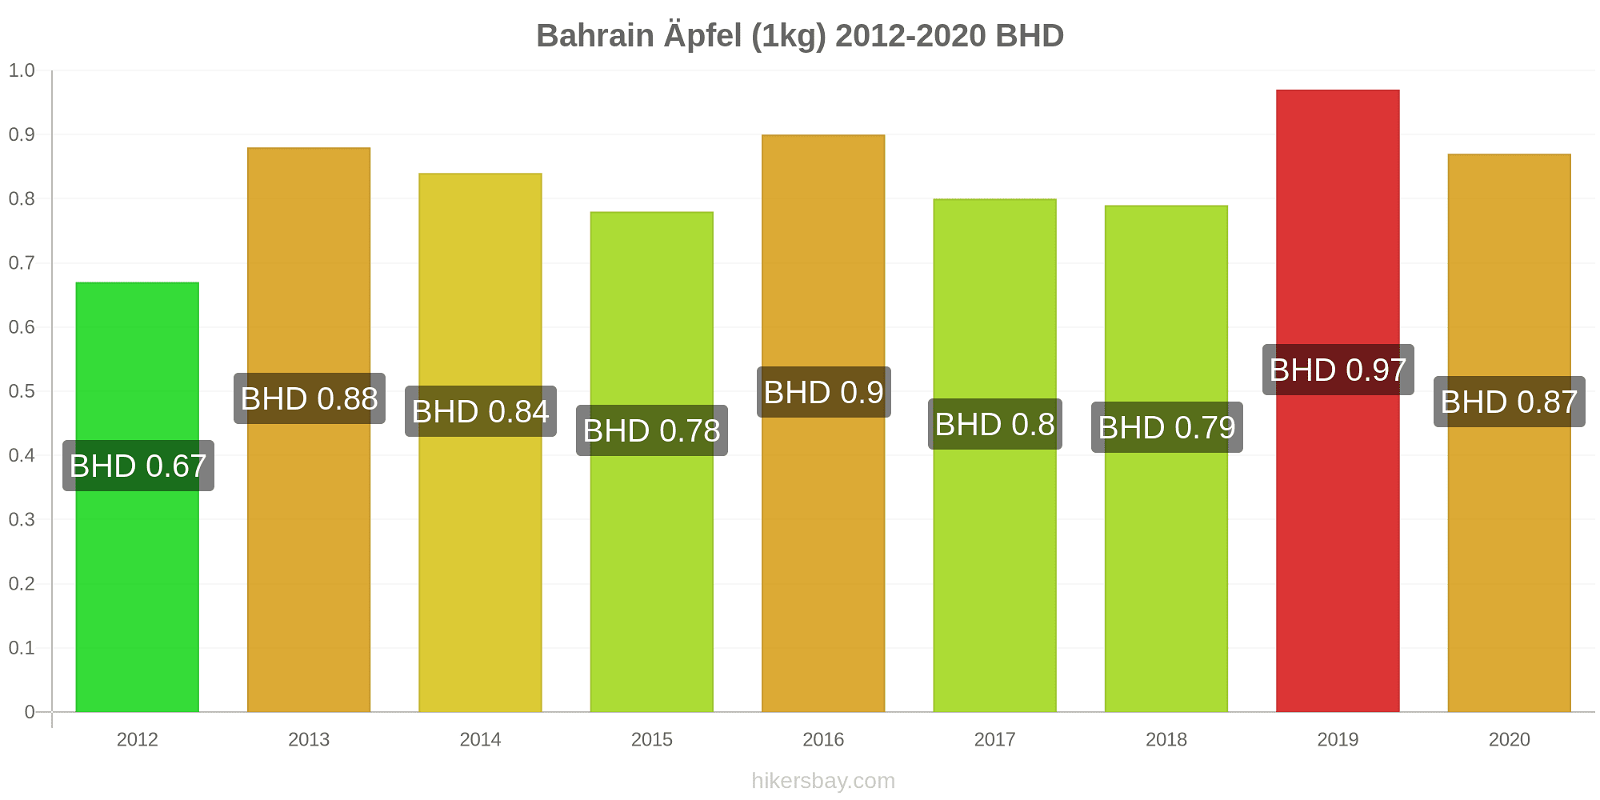 Bahrain Preisänderungen Äpfel (1kg) hikersbay.com